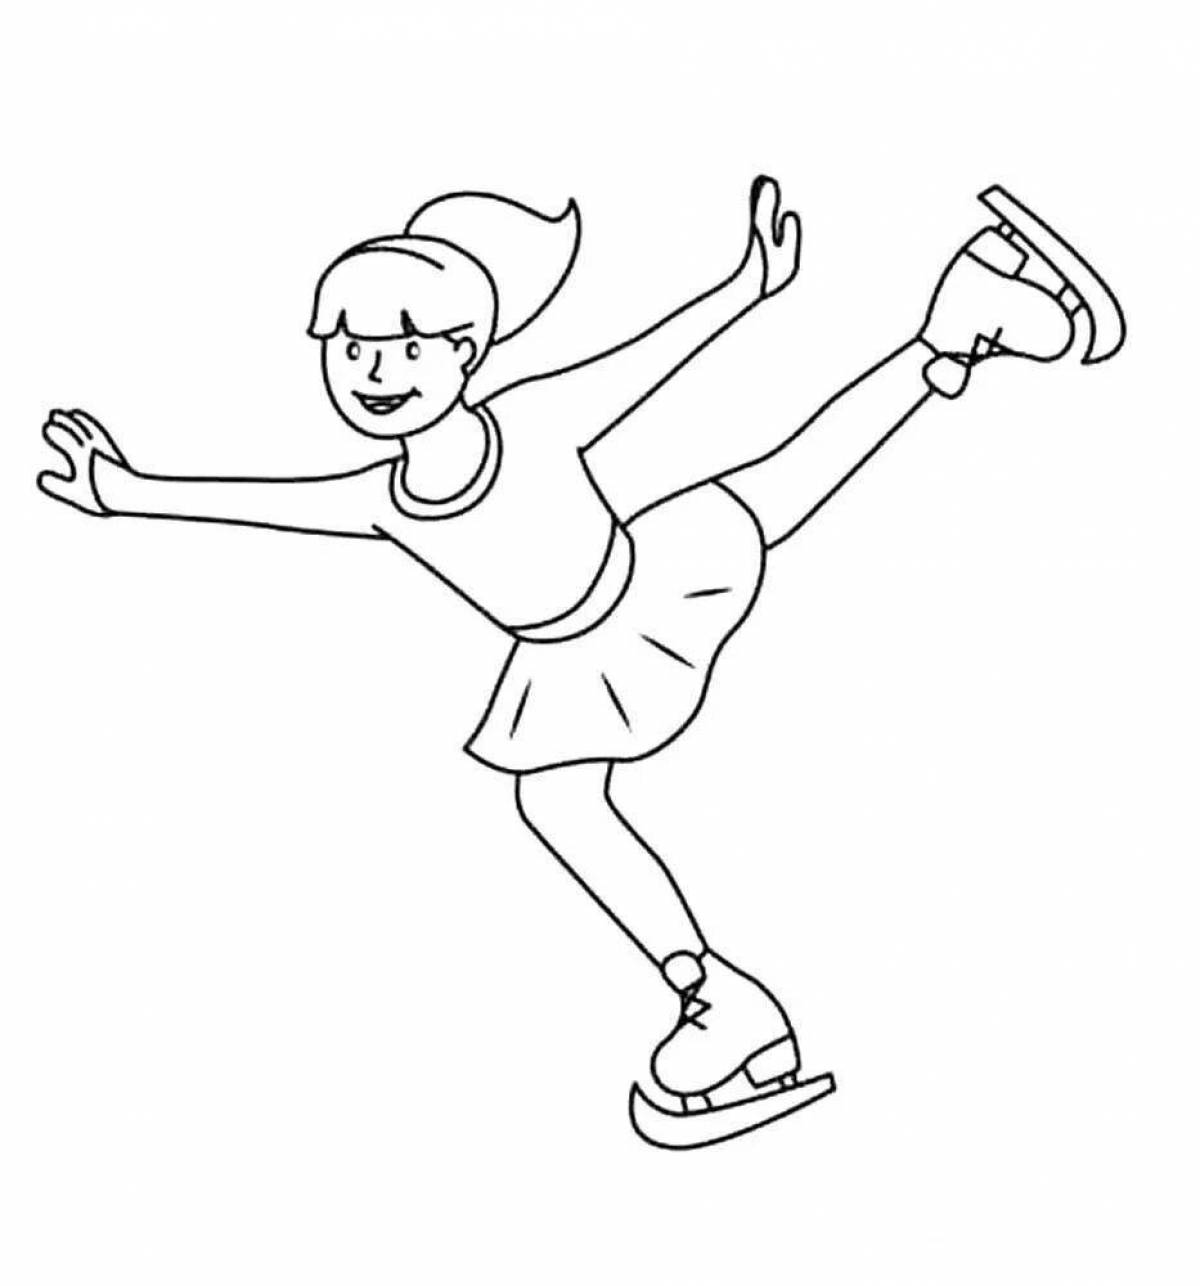 Brave skater coloring book for kids